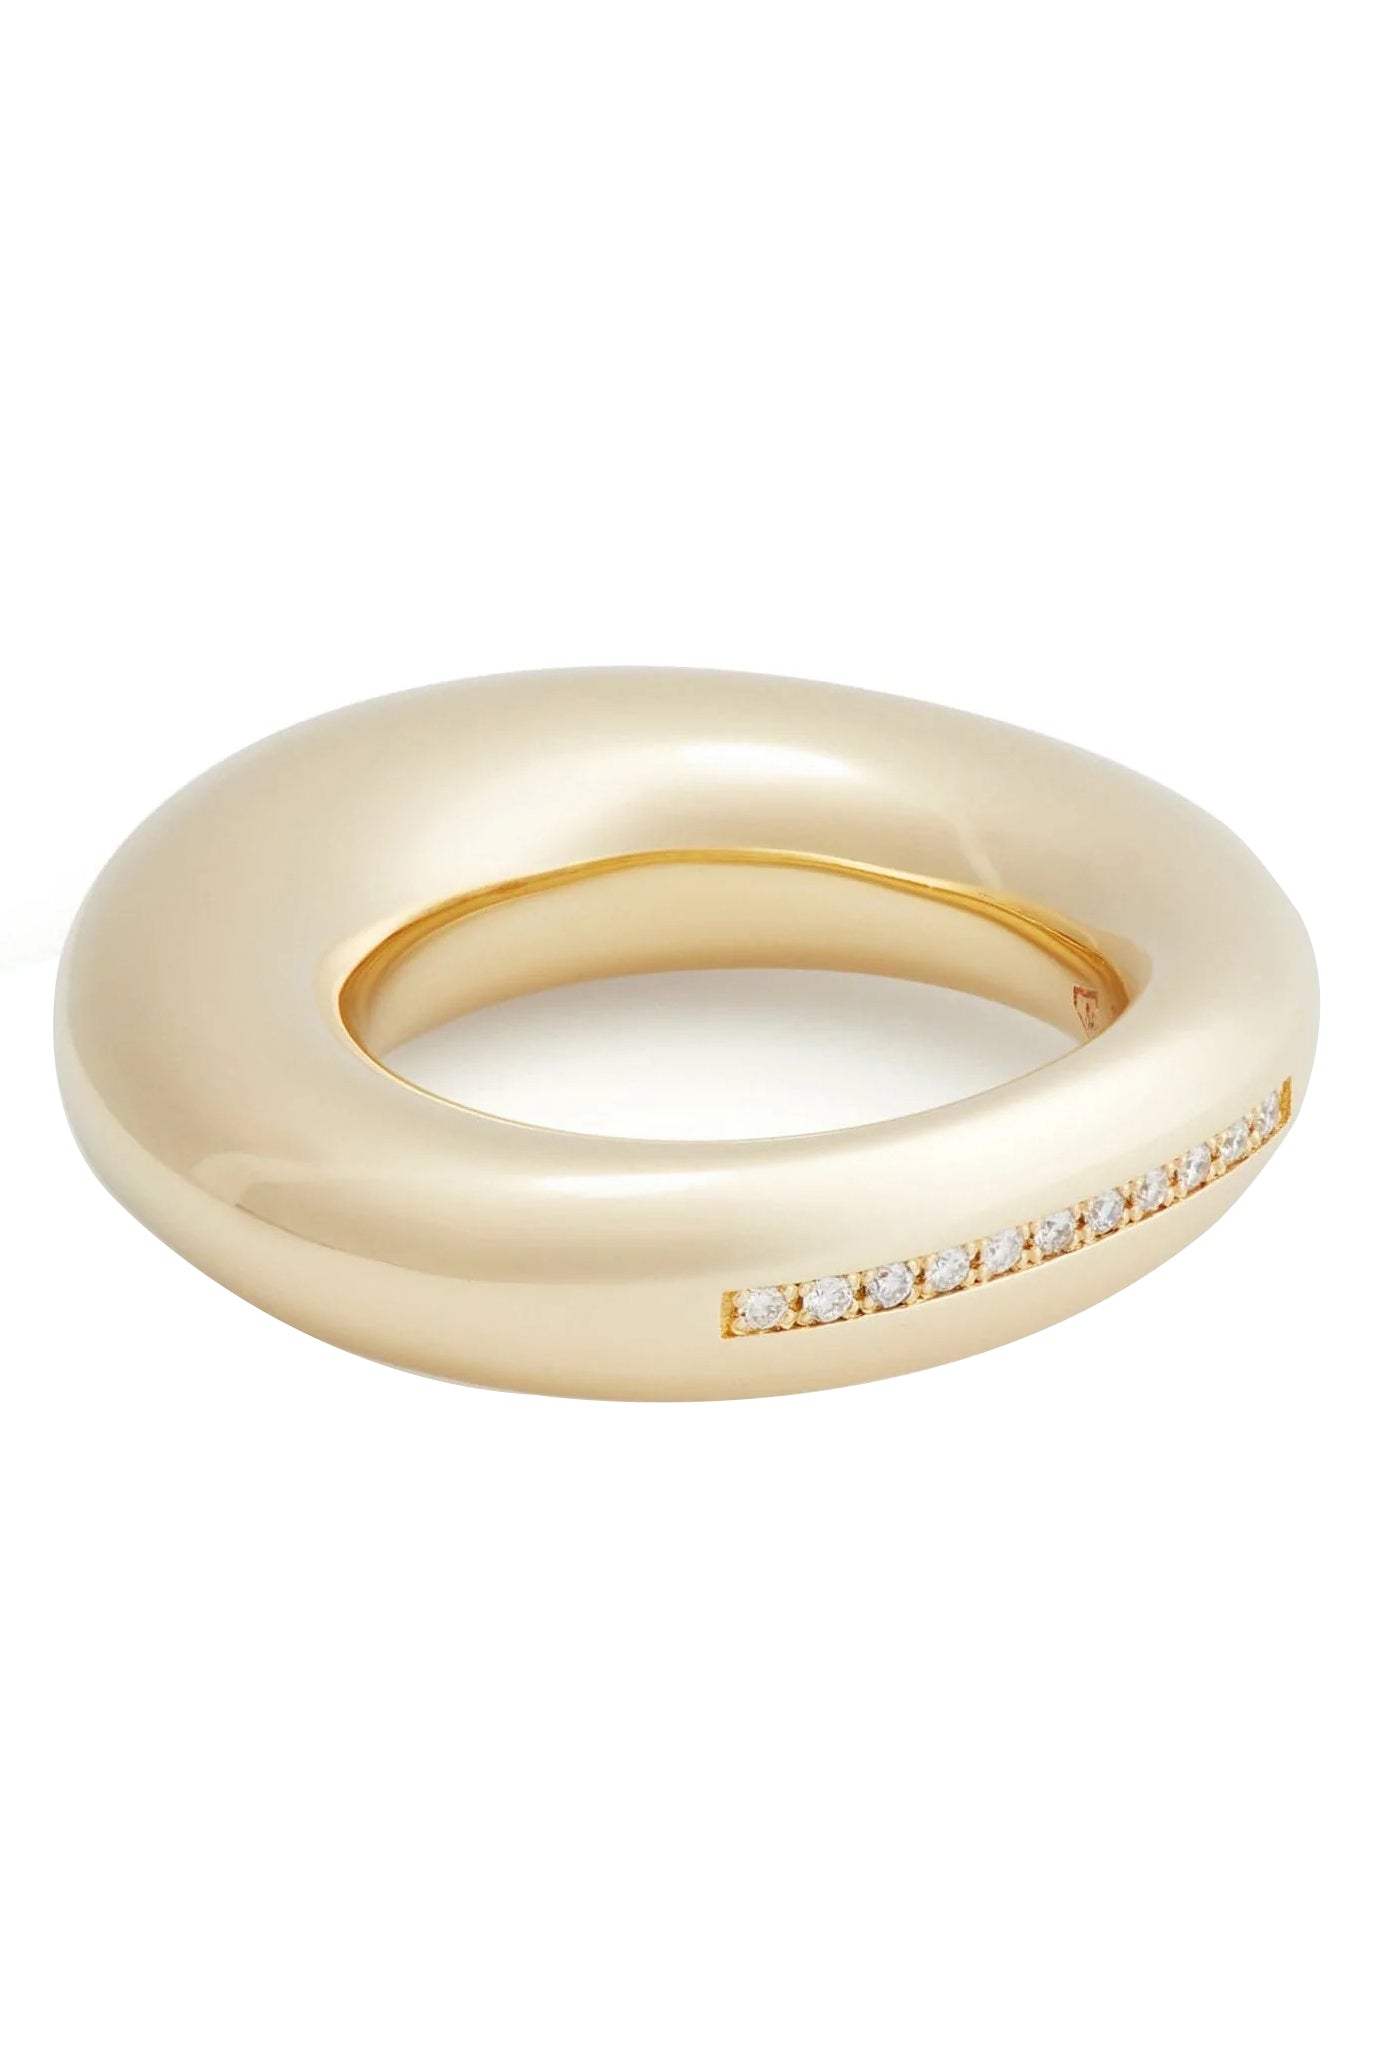 LAUREN RUBINSKI-LR19-R5 - White Diamond Ring-YELLOW GOLD